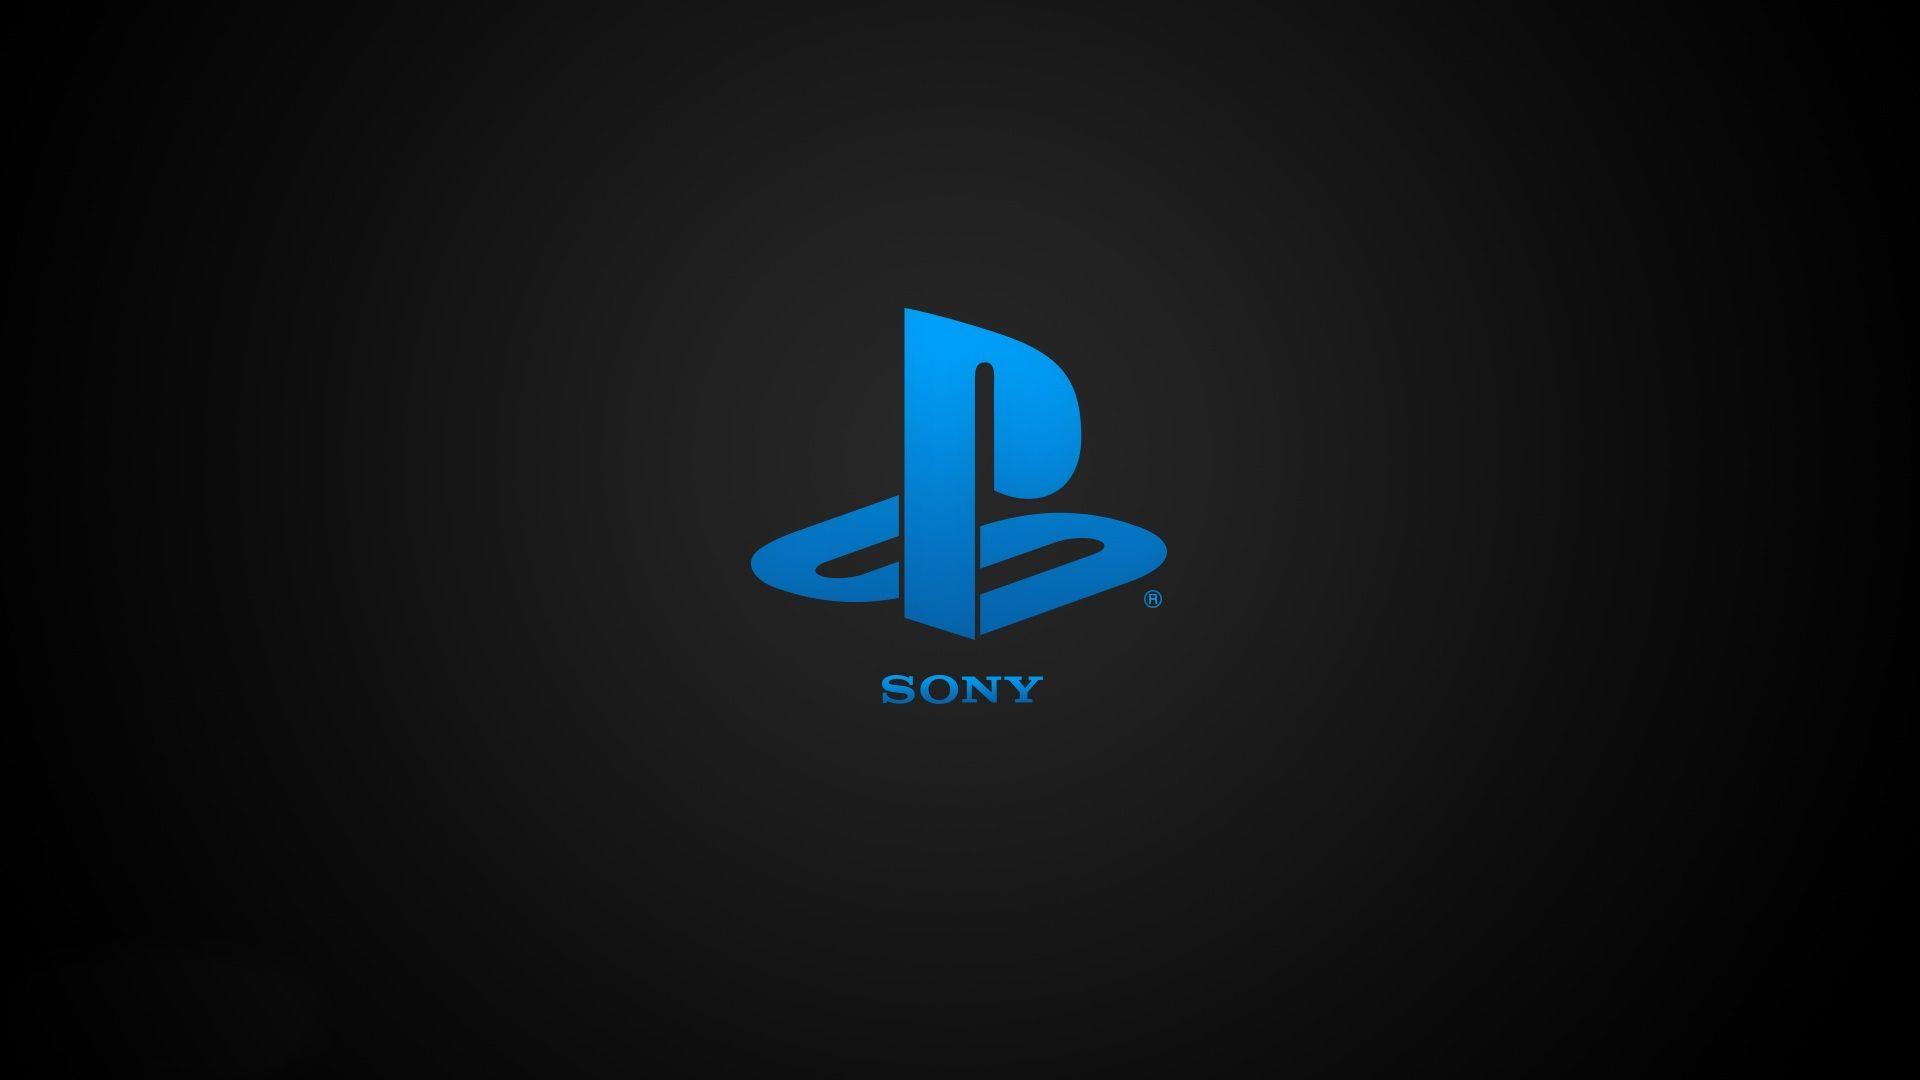 Sony Playstation blue logo wallpaper. brands and logos. Wallpaper